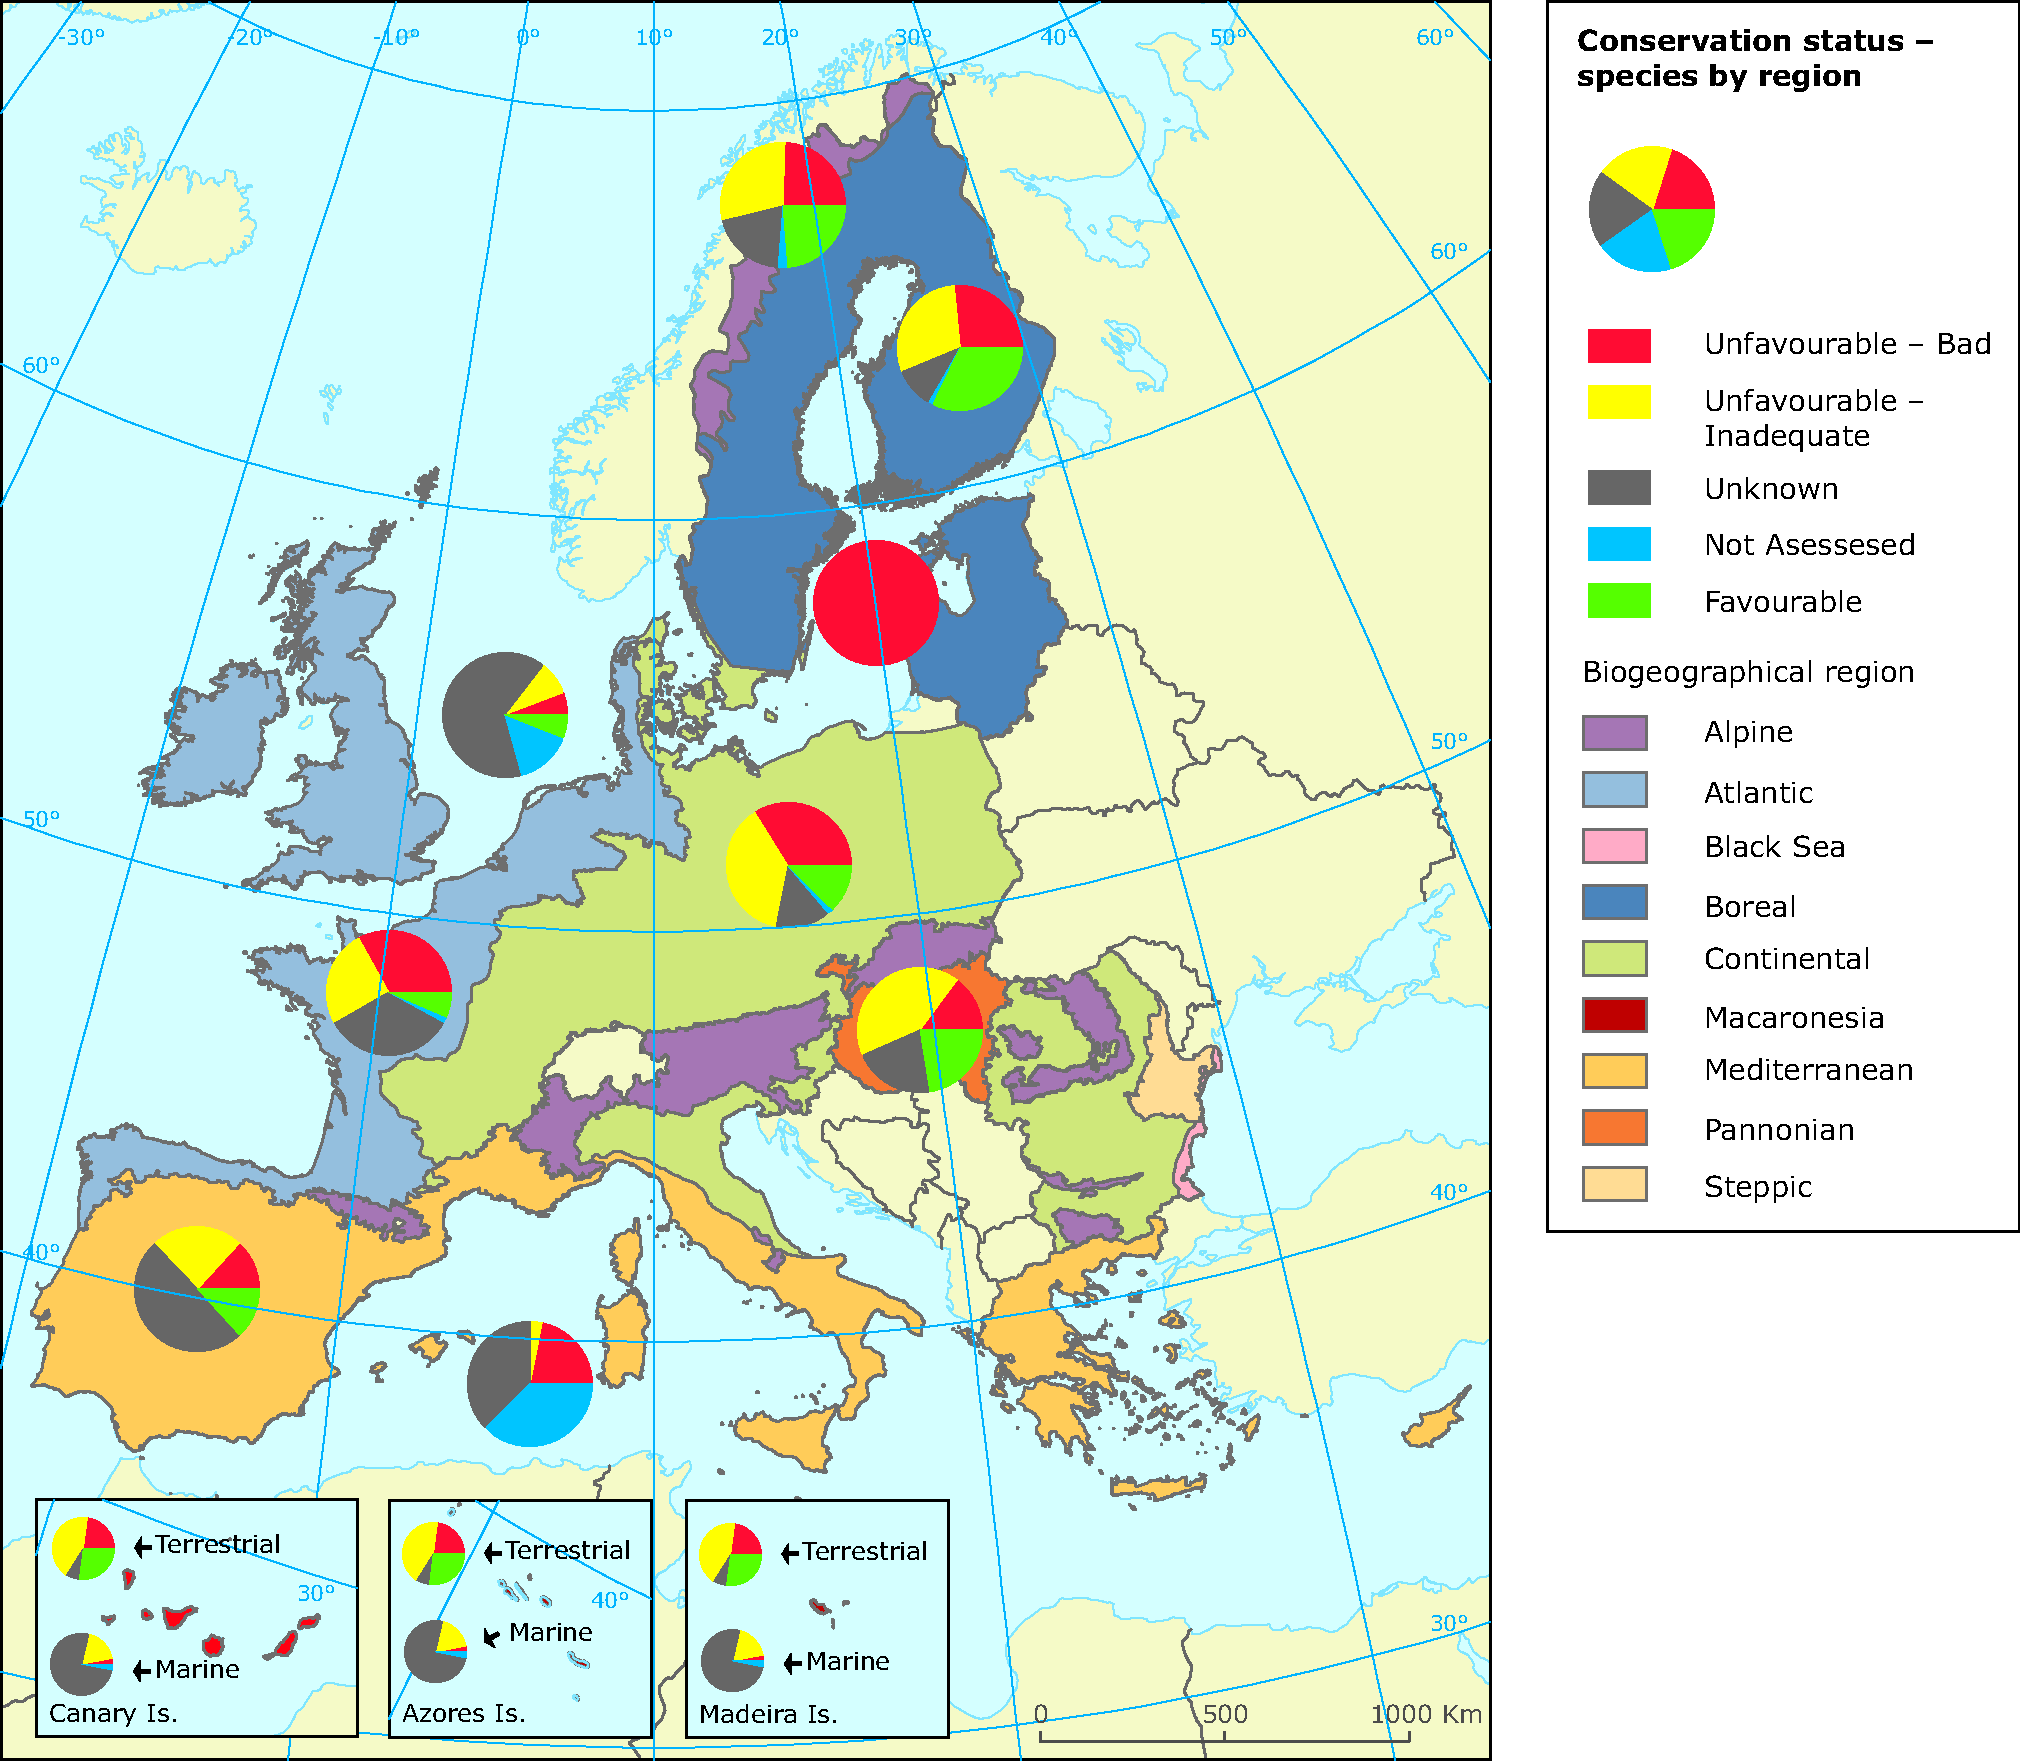 Species of European interest — conservation status by biogeographical region